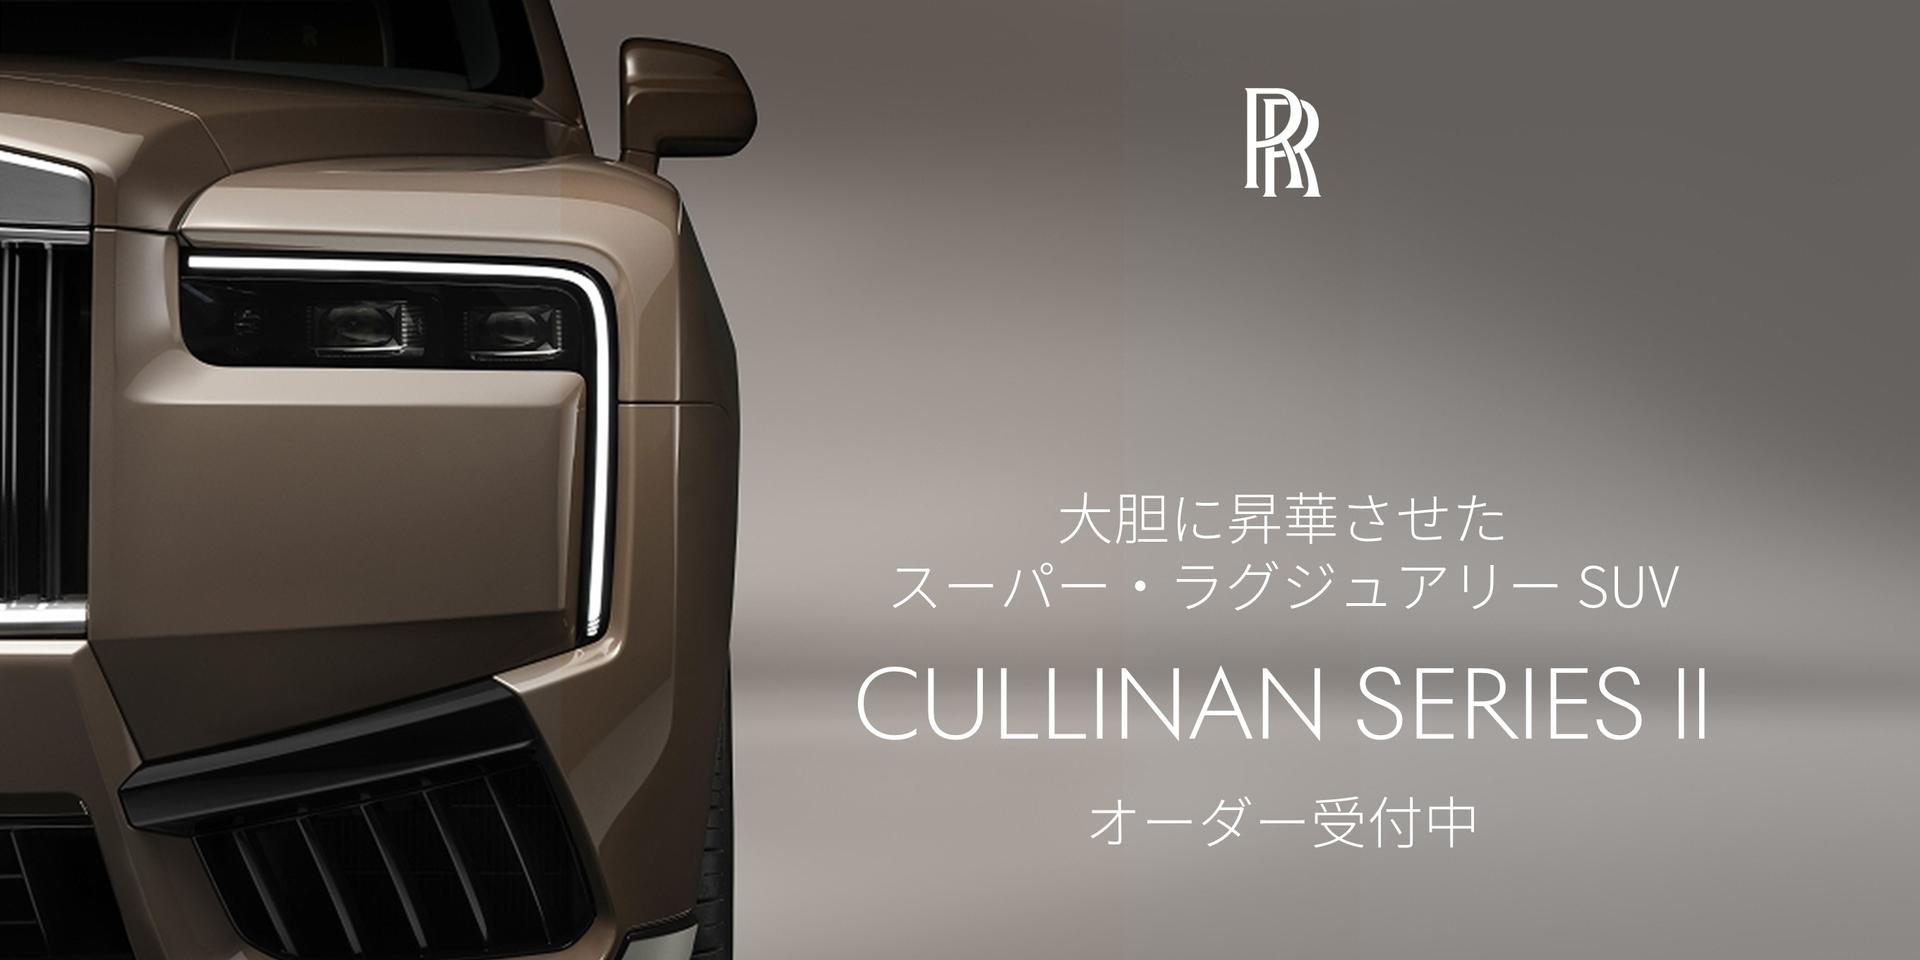 【CULLINAN SERIES Ⅱ】 デビュー 
<br>
ロールス・ロイス・モーター・カーズ 東京 / 大阪